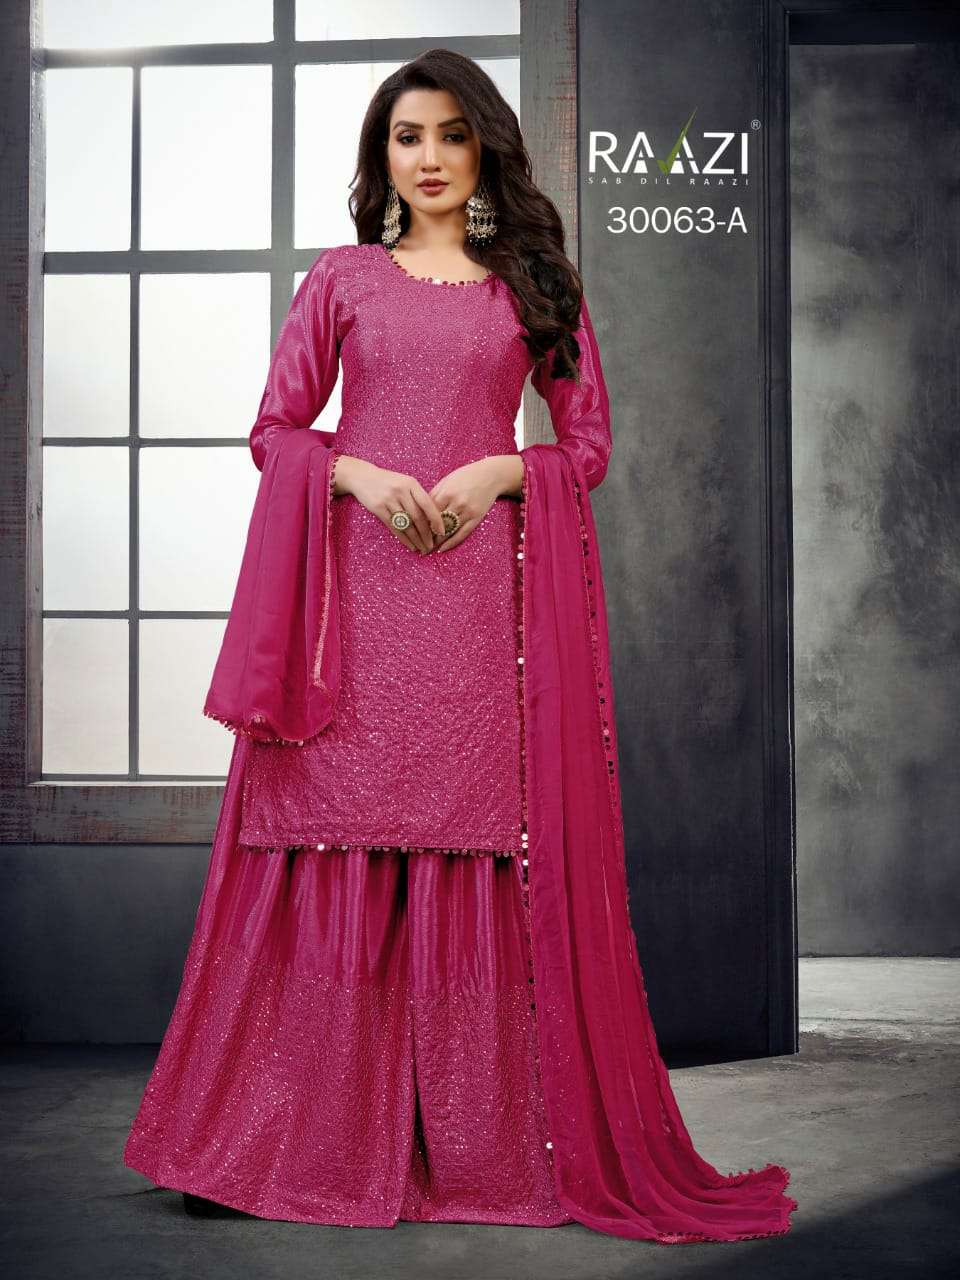 CreationBuddy Women's Gajari Color Cotton Fancy Designer Salwar Suit  Unstitched Dress Materials : Amazon.in: Fashion